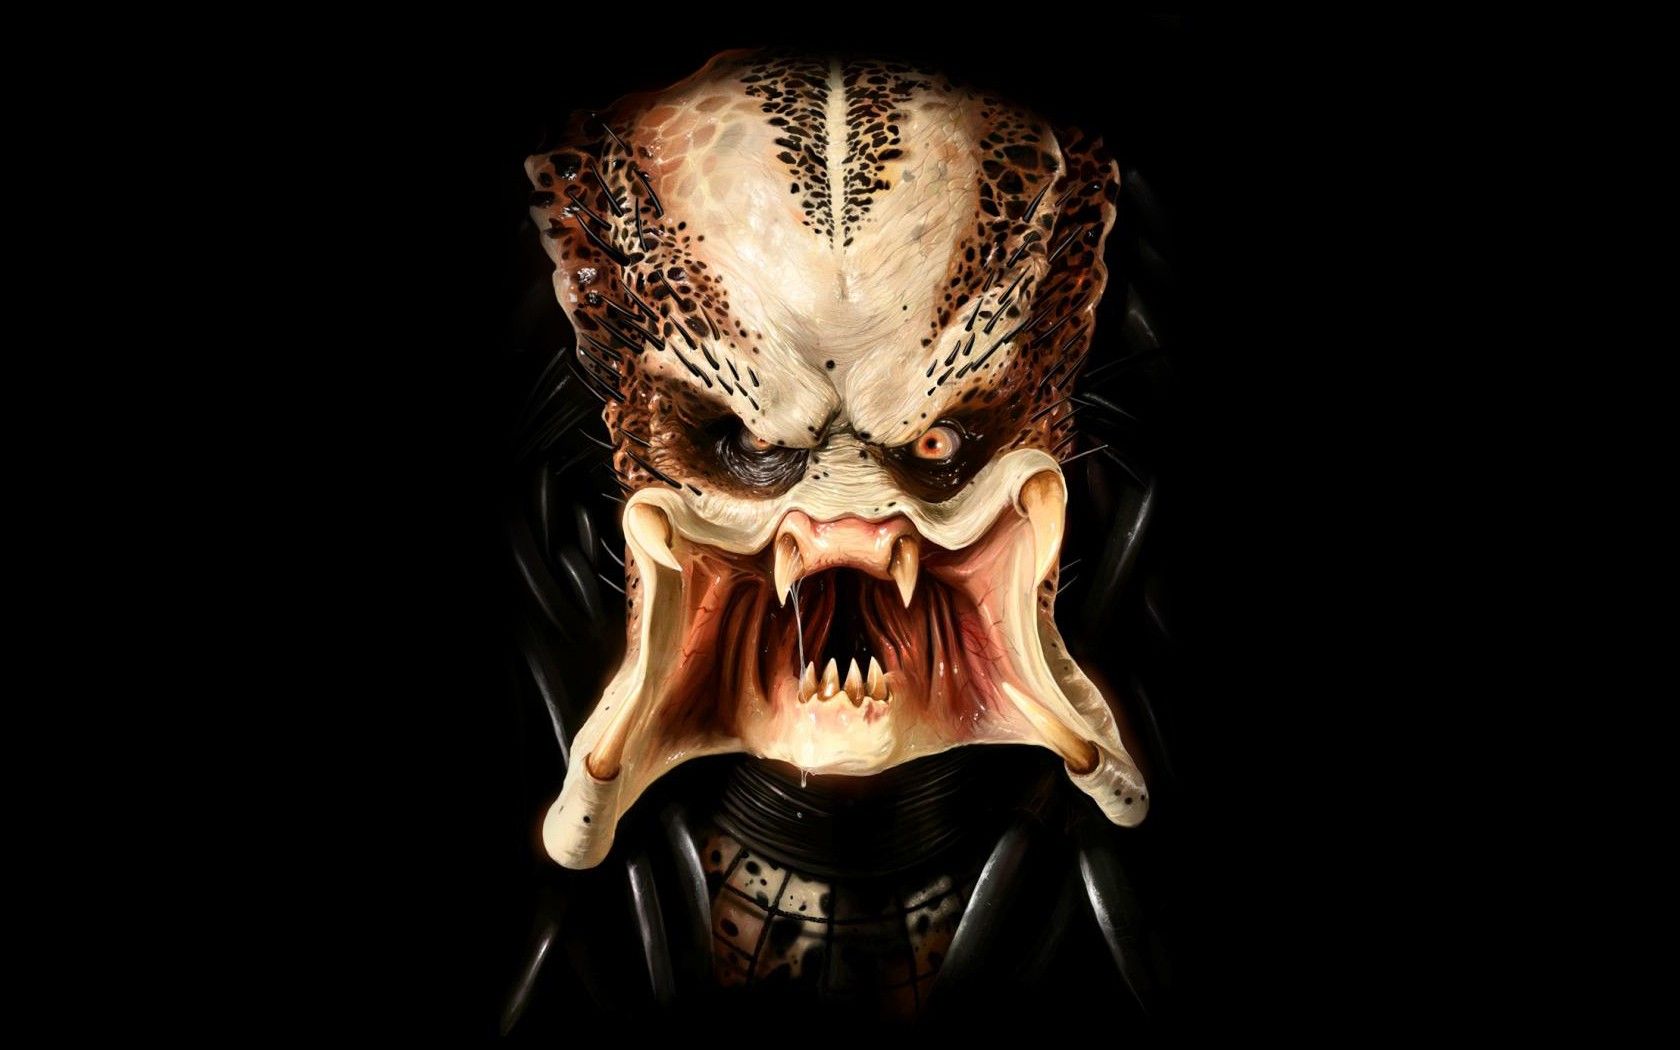 Wallpaper hd: Alien vs Predator - download free in 4K, wallpaper Movie